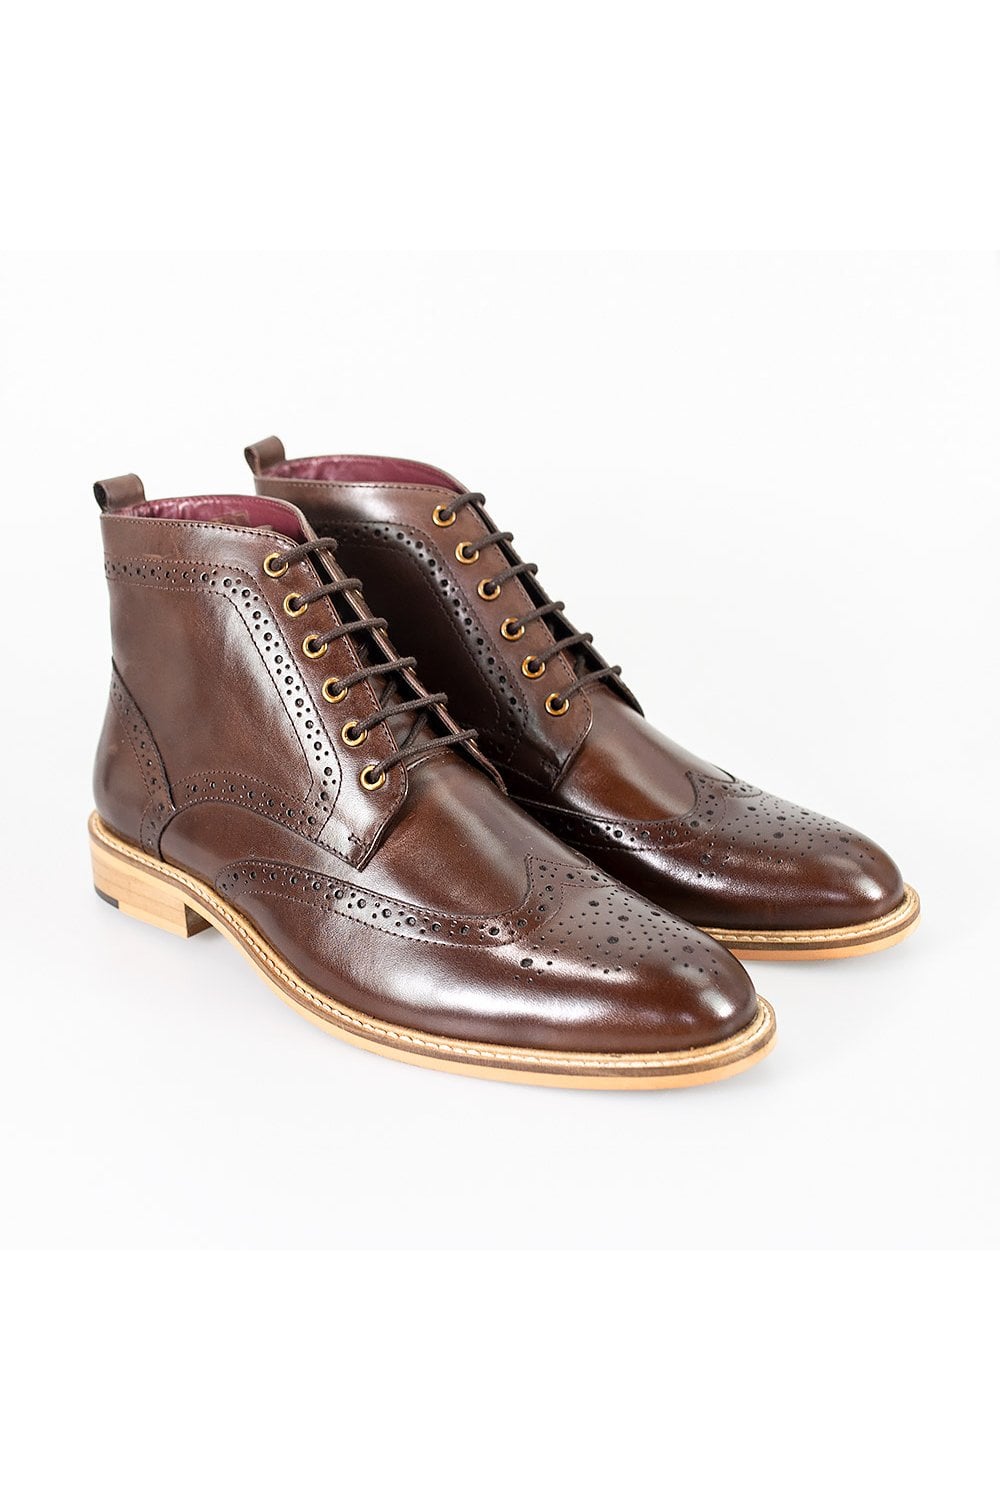 Cavani Holmes Signature boots brown